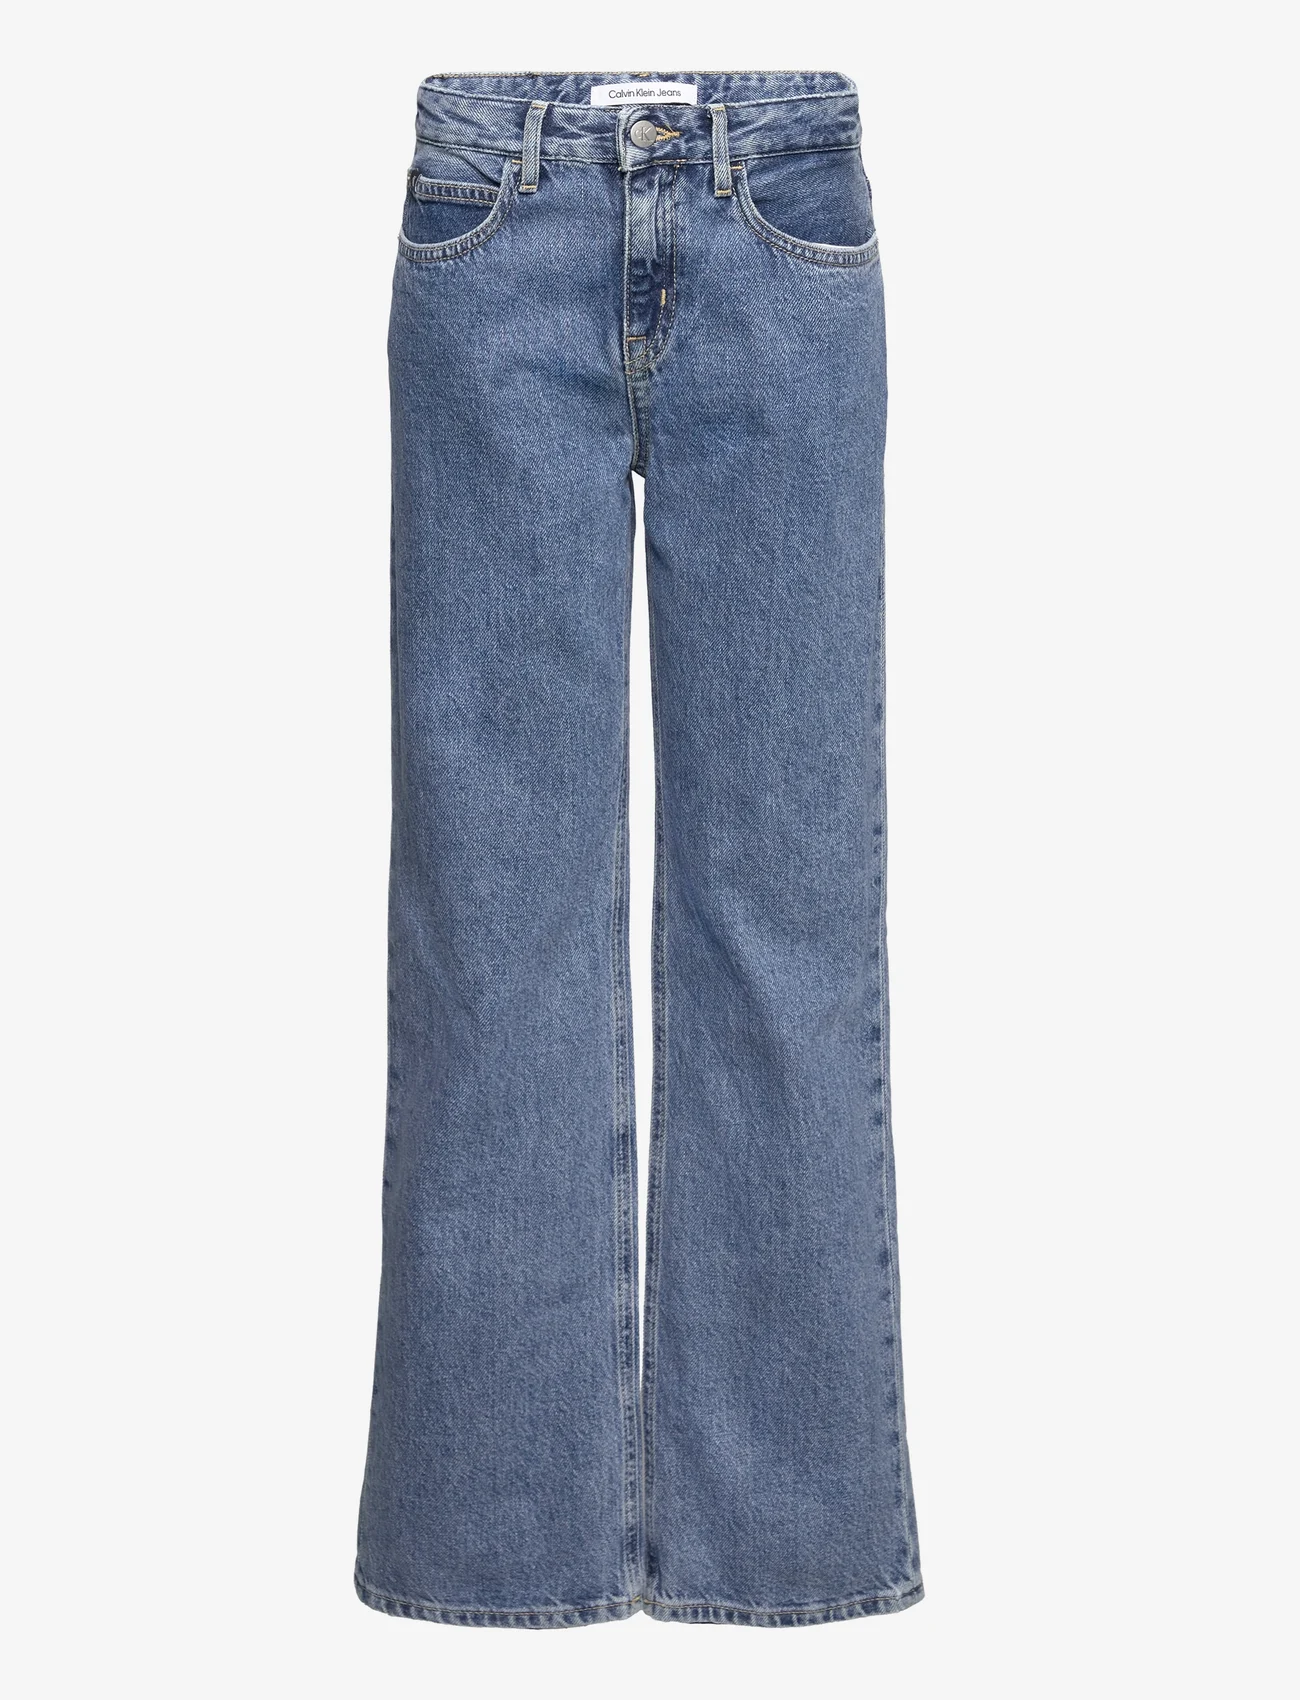 Calvin Klein - HR WIDE LEG MID BLUE RIGID - jeans met wijde pijpen - mid blue rigid - 0